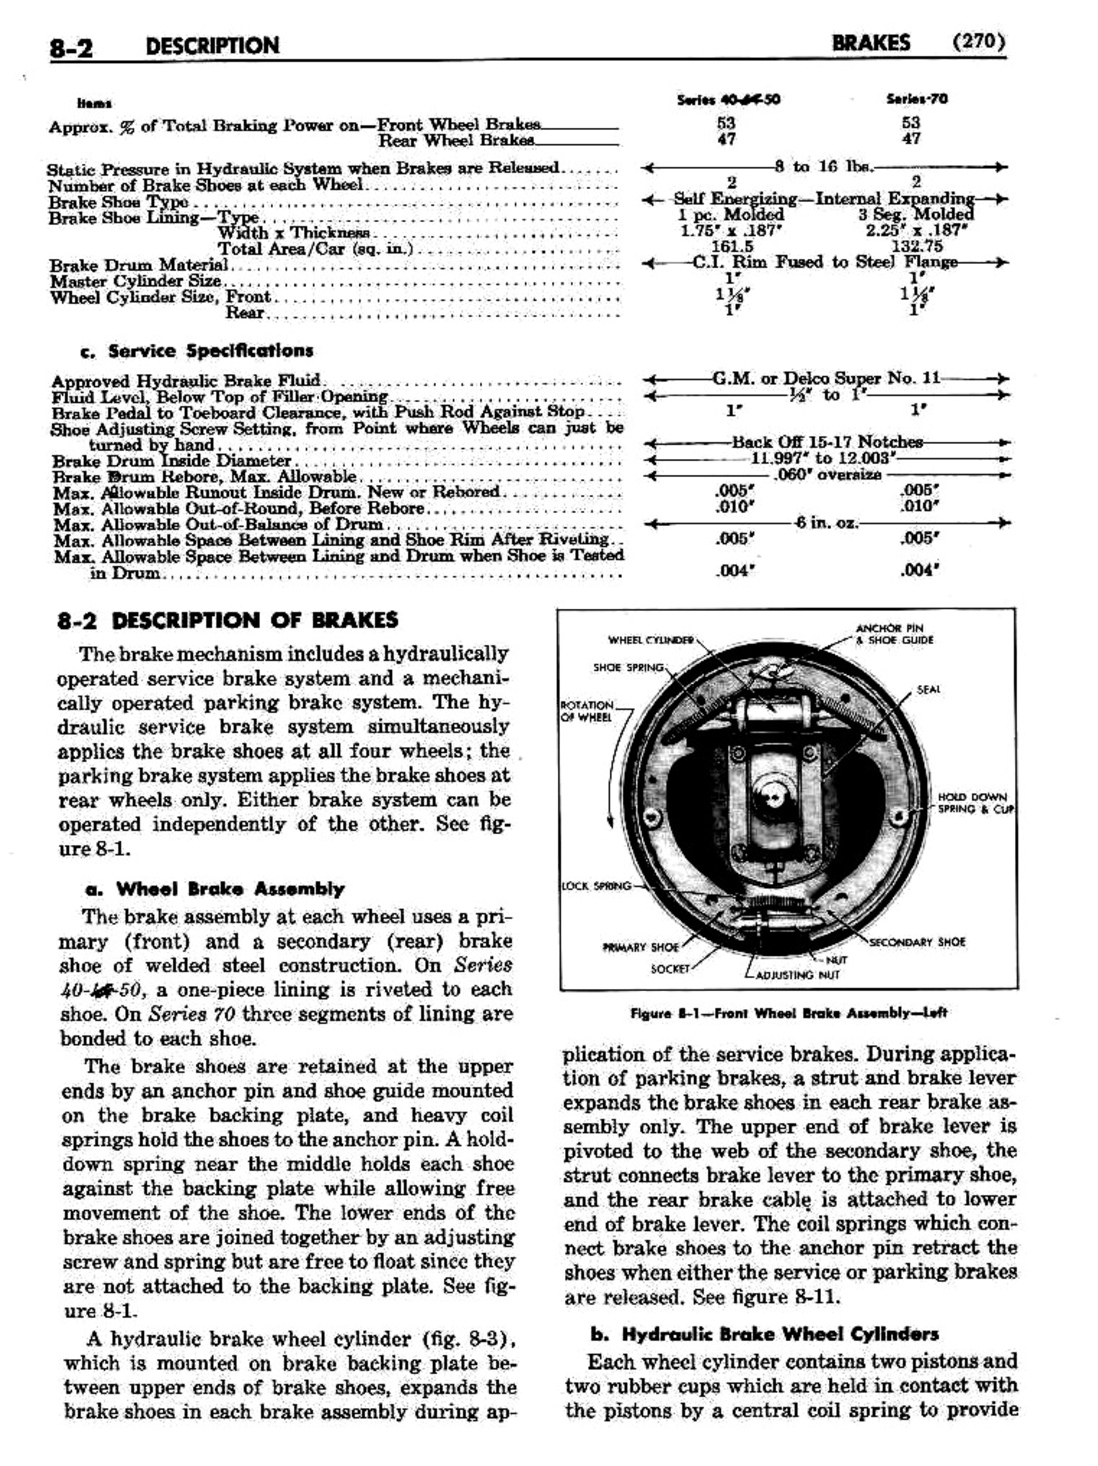 n_09 1951 Buick Shop Manual - Brakes-002-002.jpg